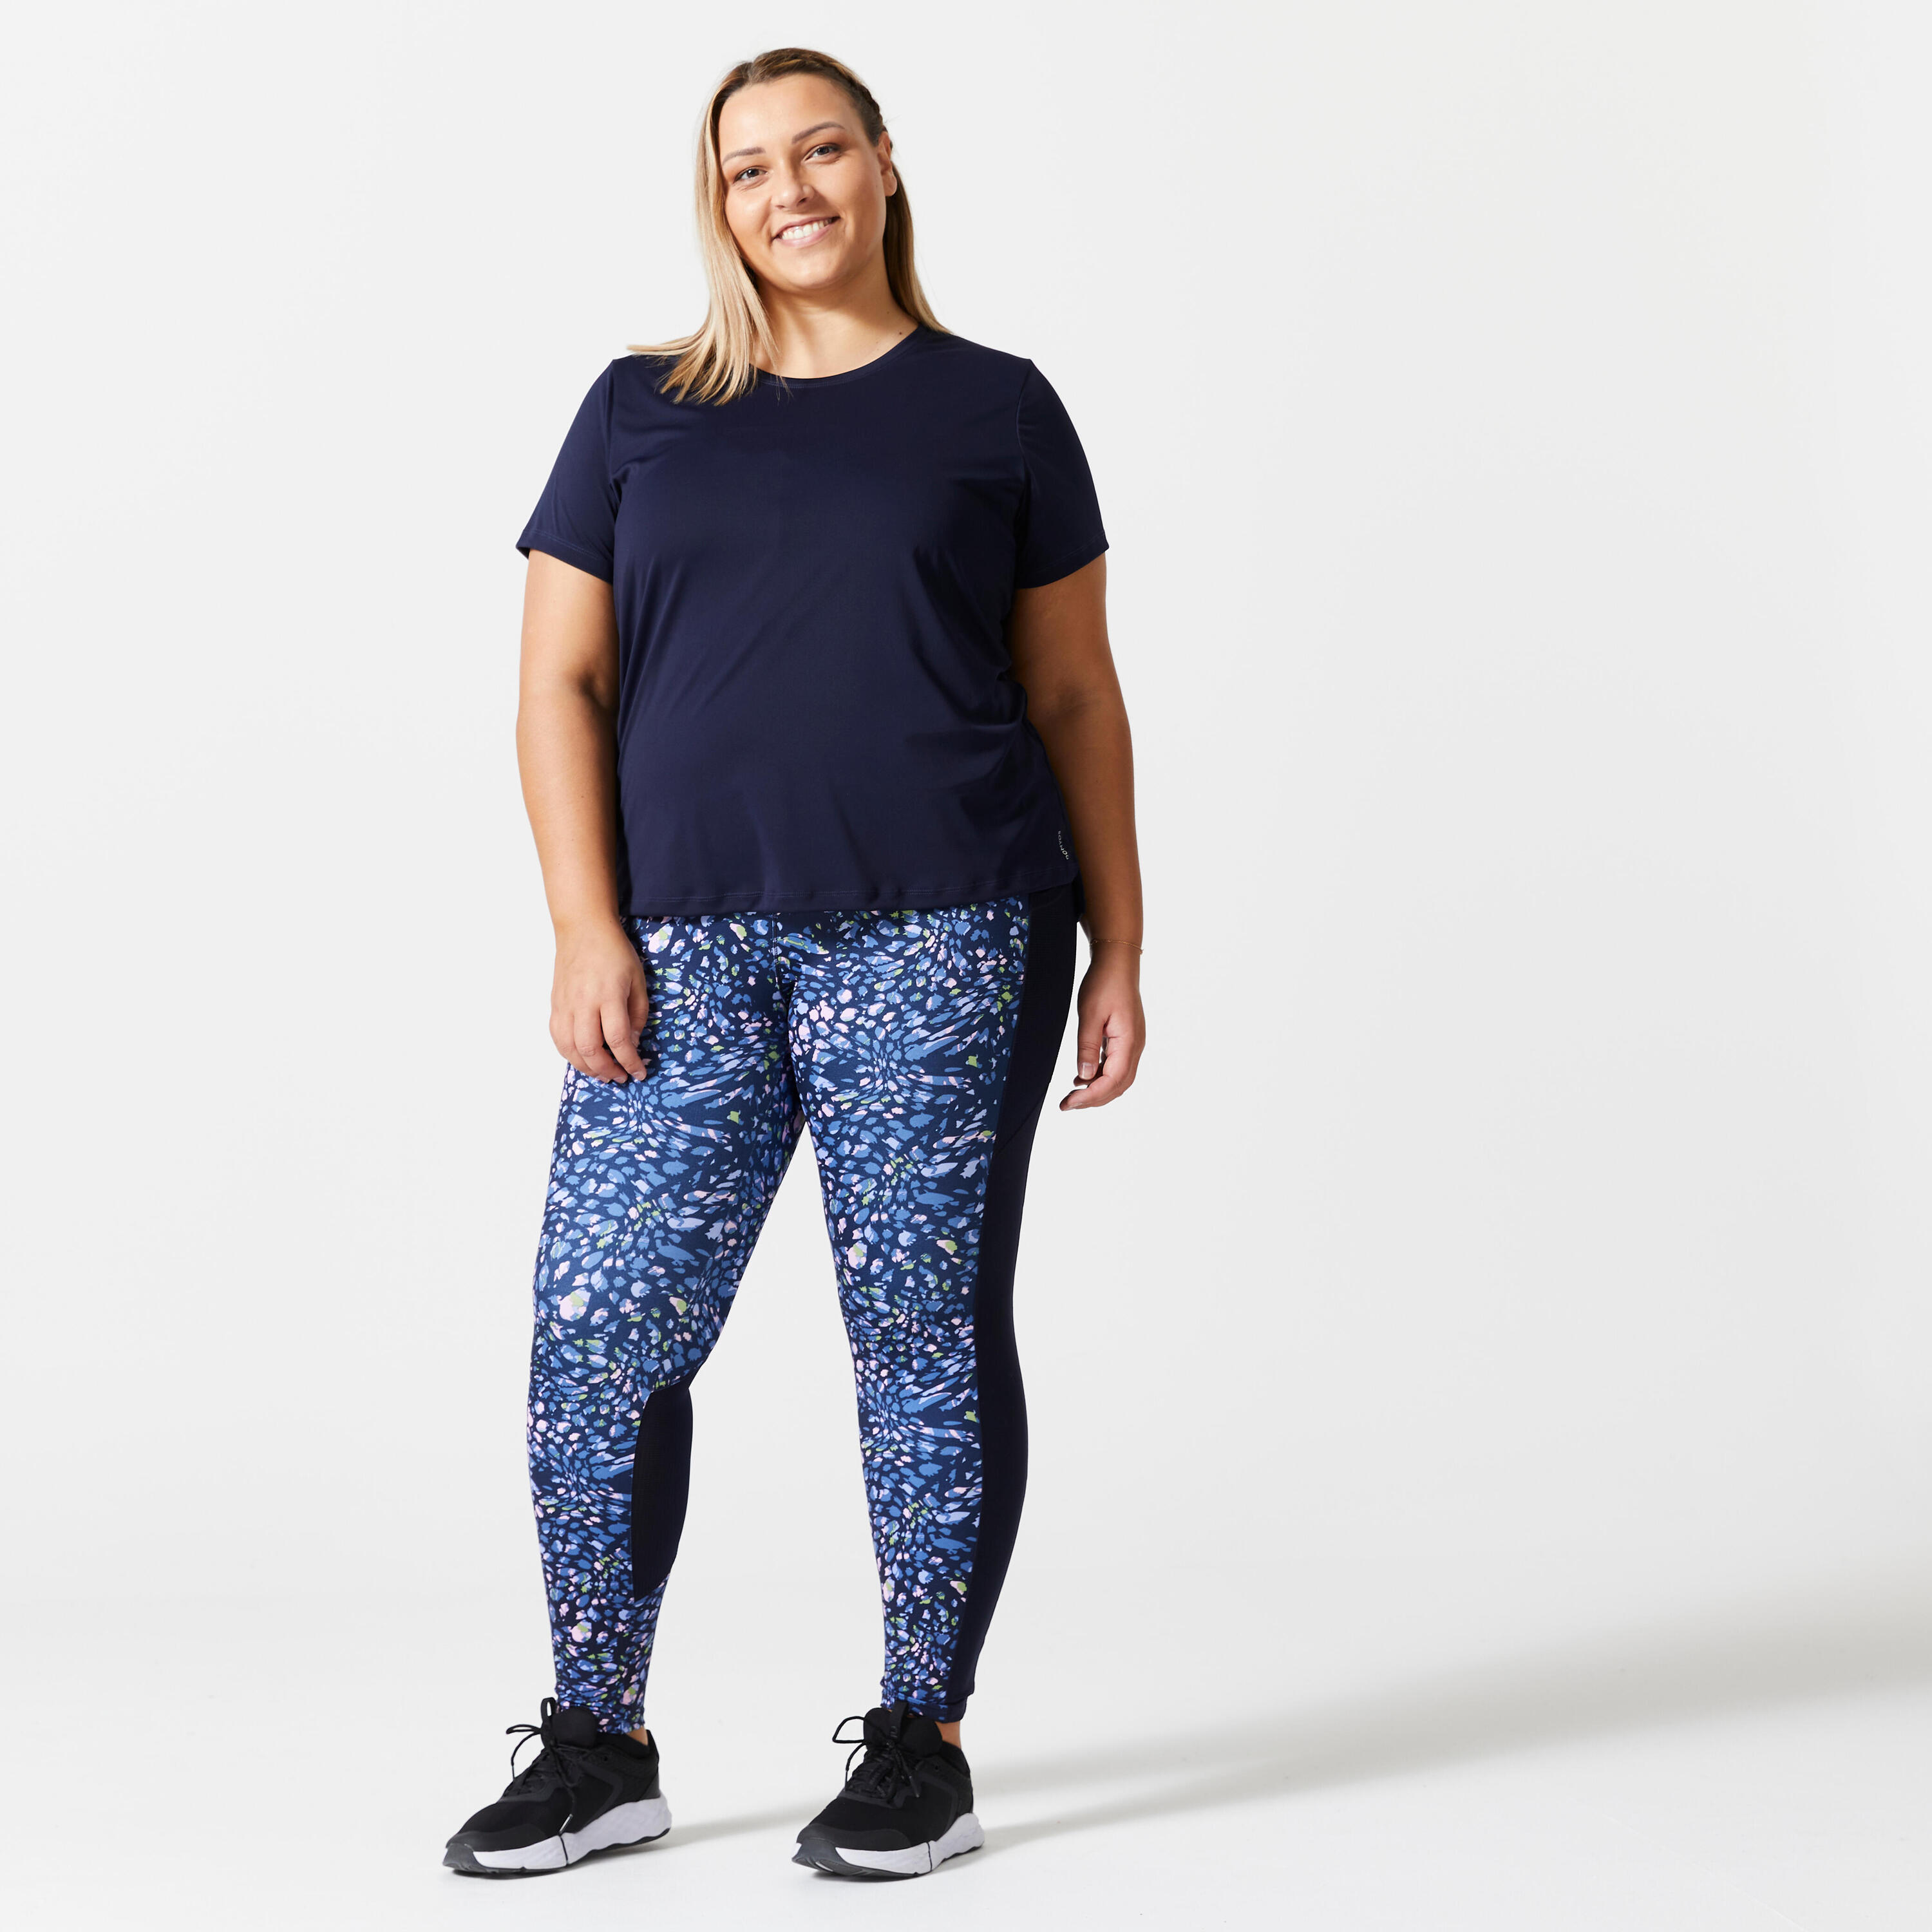 Women's Cardio Fitness Short-Sleeved Plus Size T-Shirt - Navy Blue 2/5